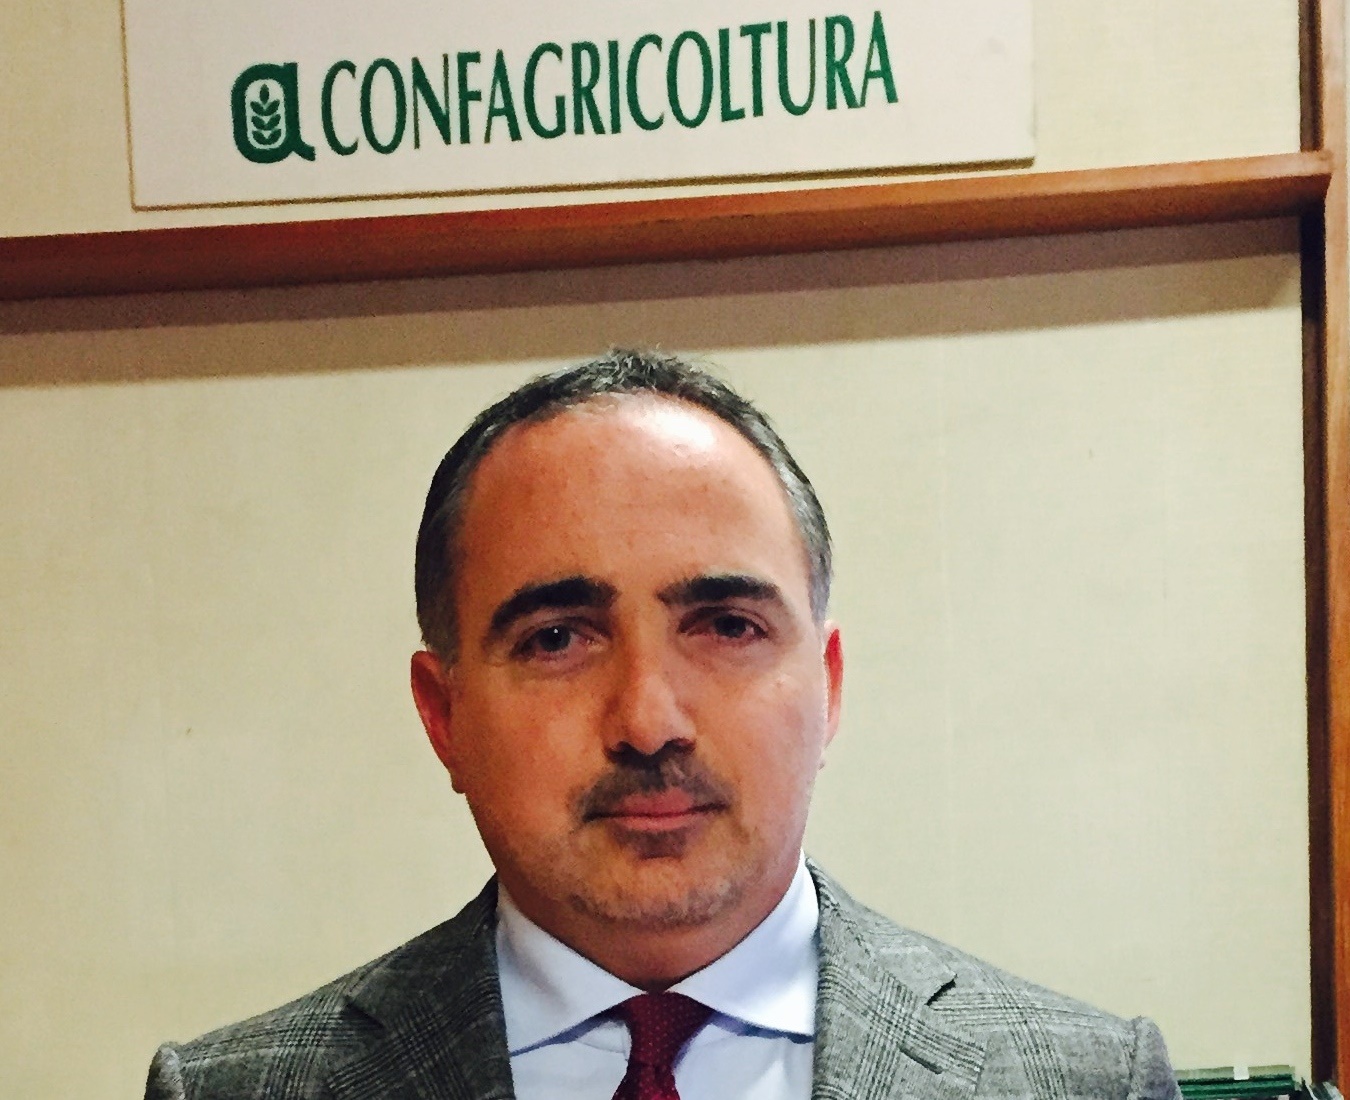 Giuseppe Malvetani